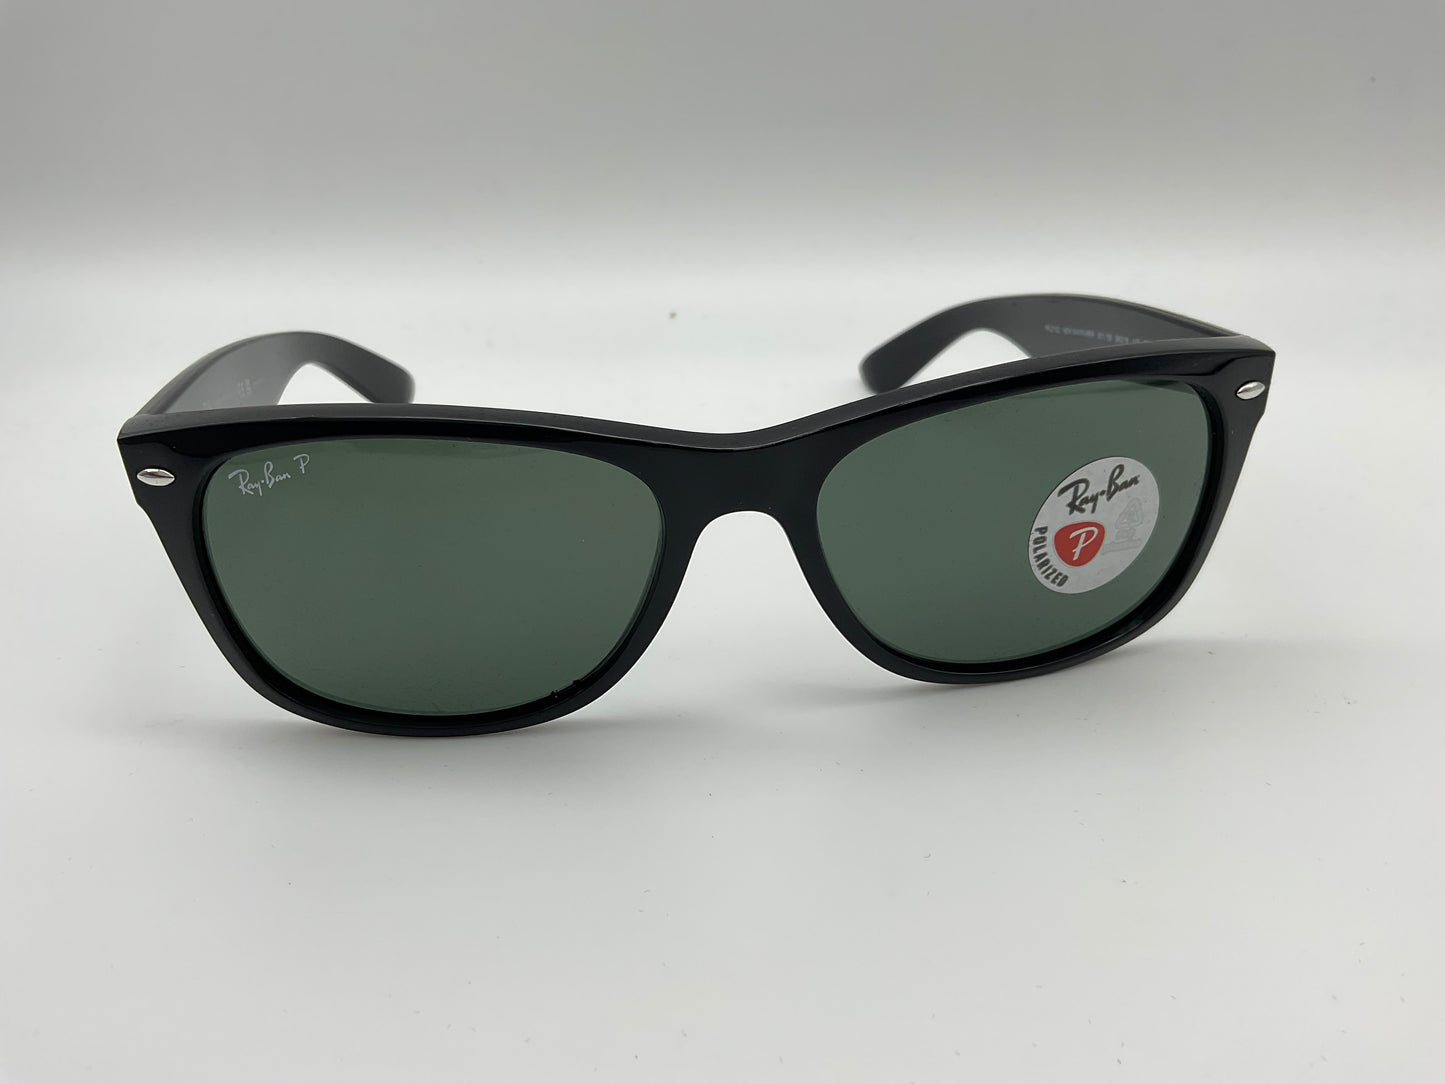 Ray Ban New Wayfarer 58mm Classic Polarized Green Sunglasses